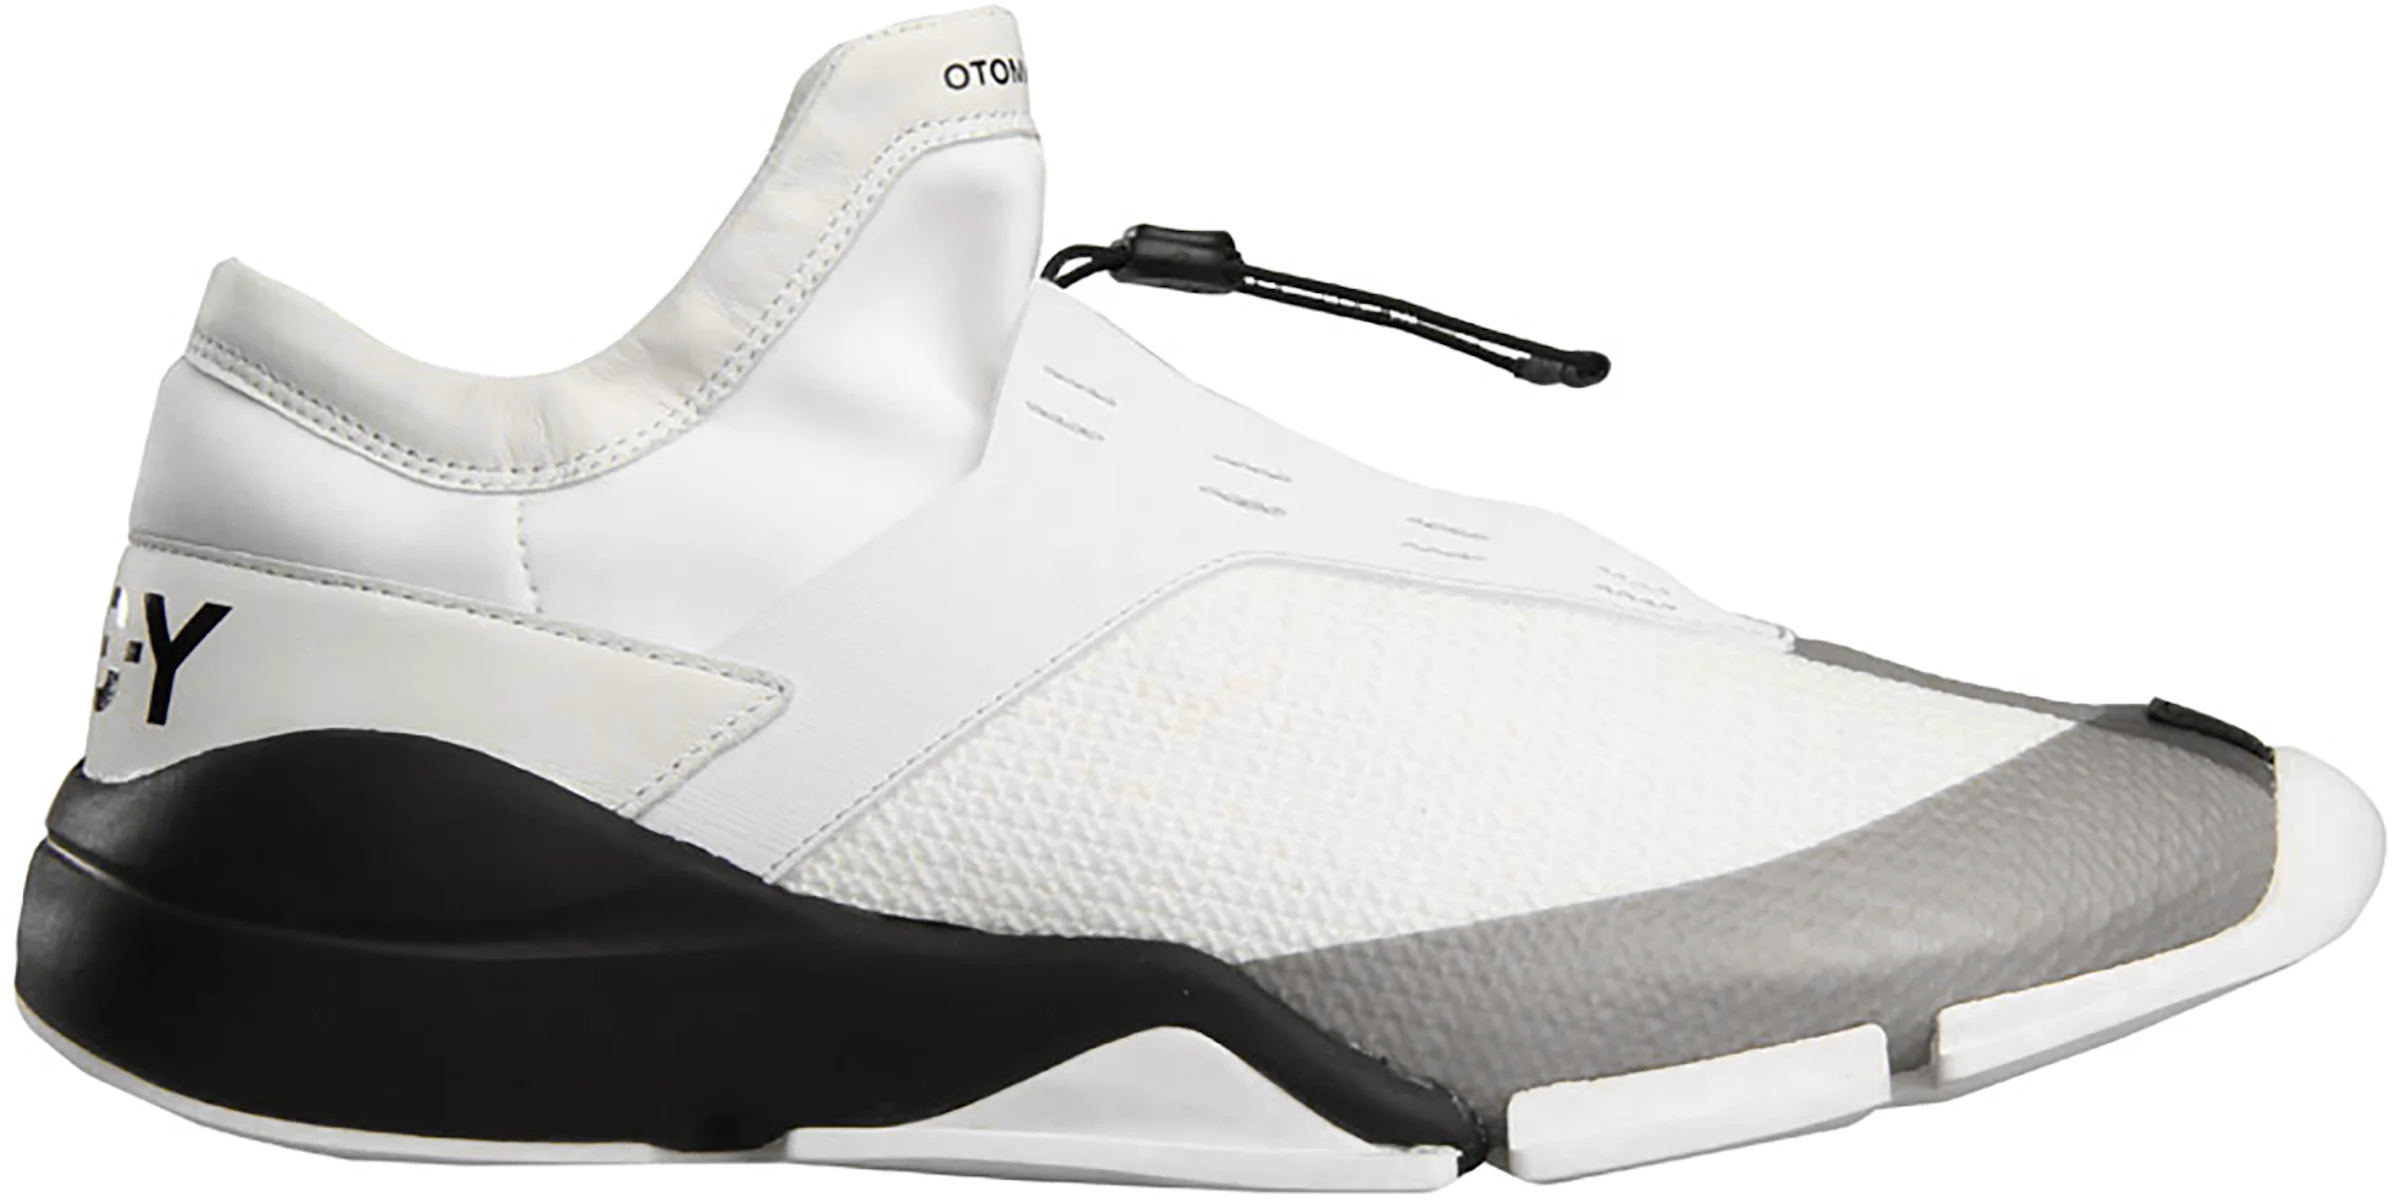 adidas Y-3 Future Low White Black Men's - S82132 - US